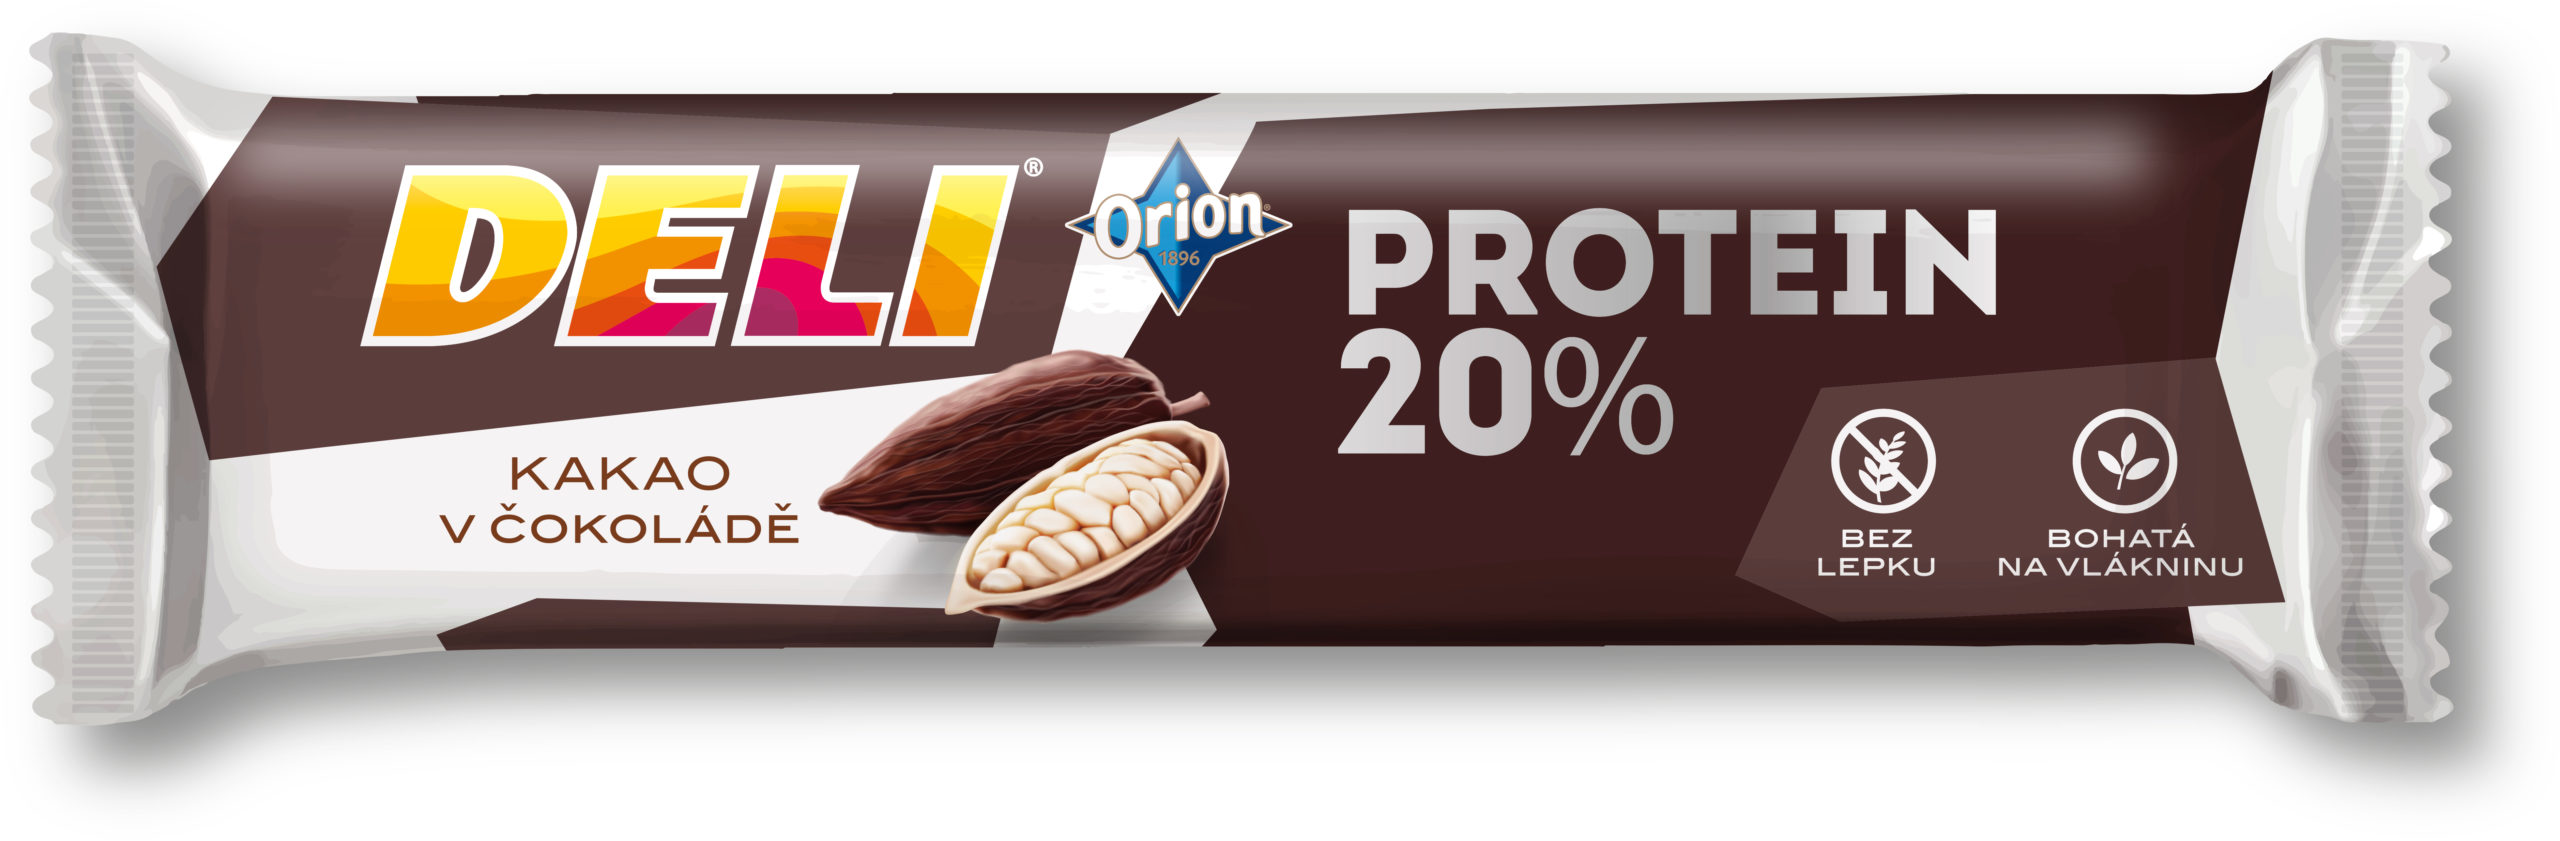 Deli_protein_tycinka_kakao.jpg